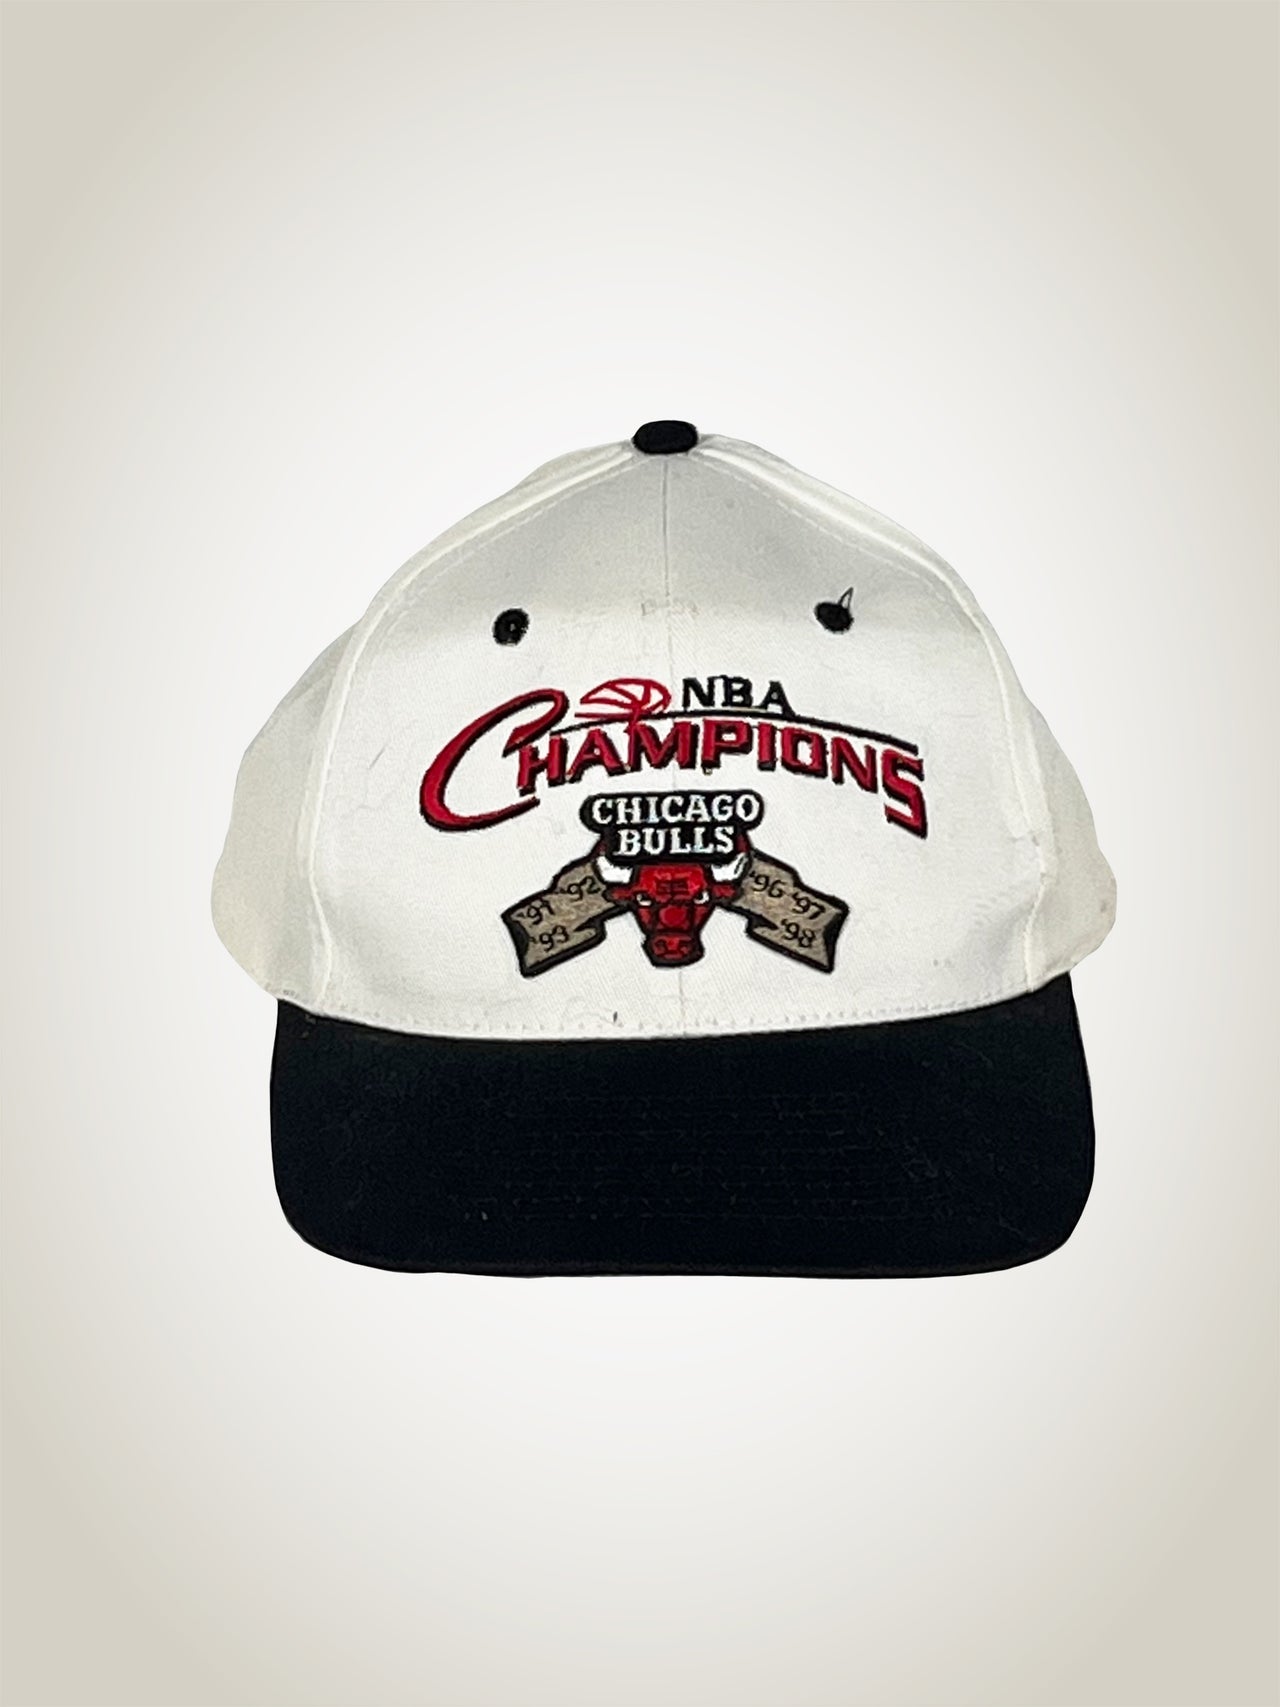 Vintage Chicago Bulls Champions Hat